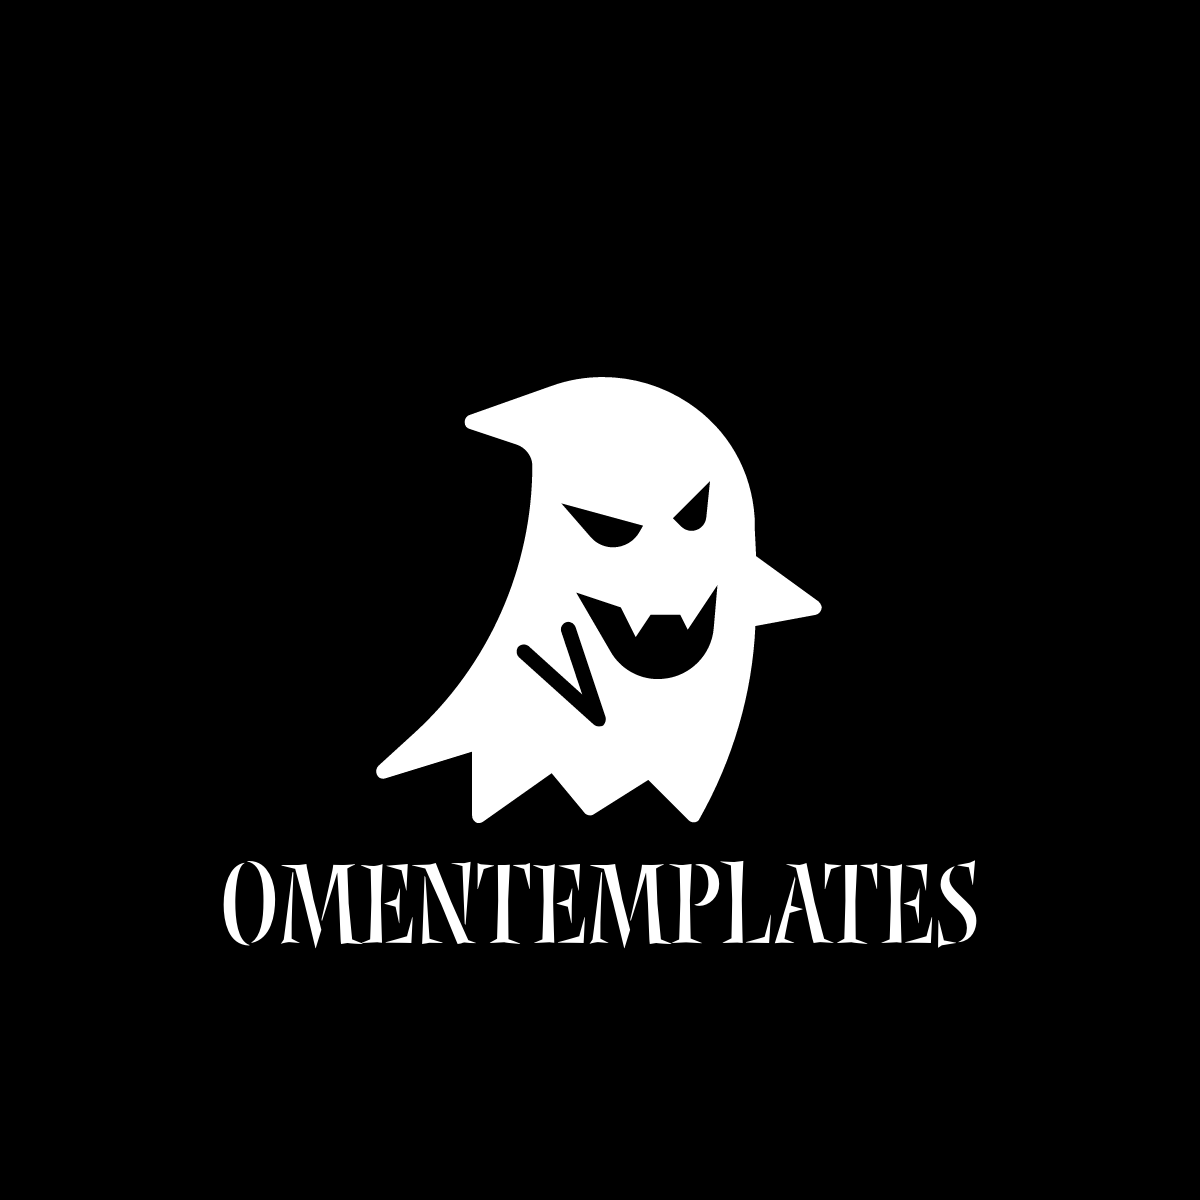 OmenTemplatesのプロフィール画像